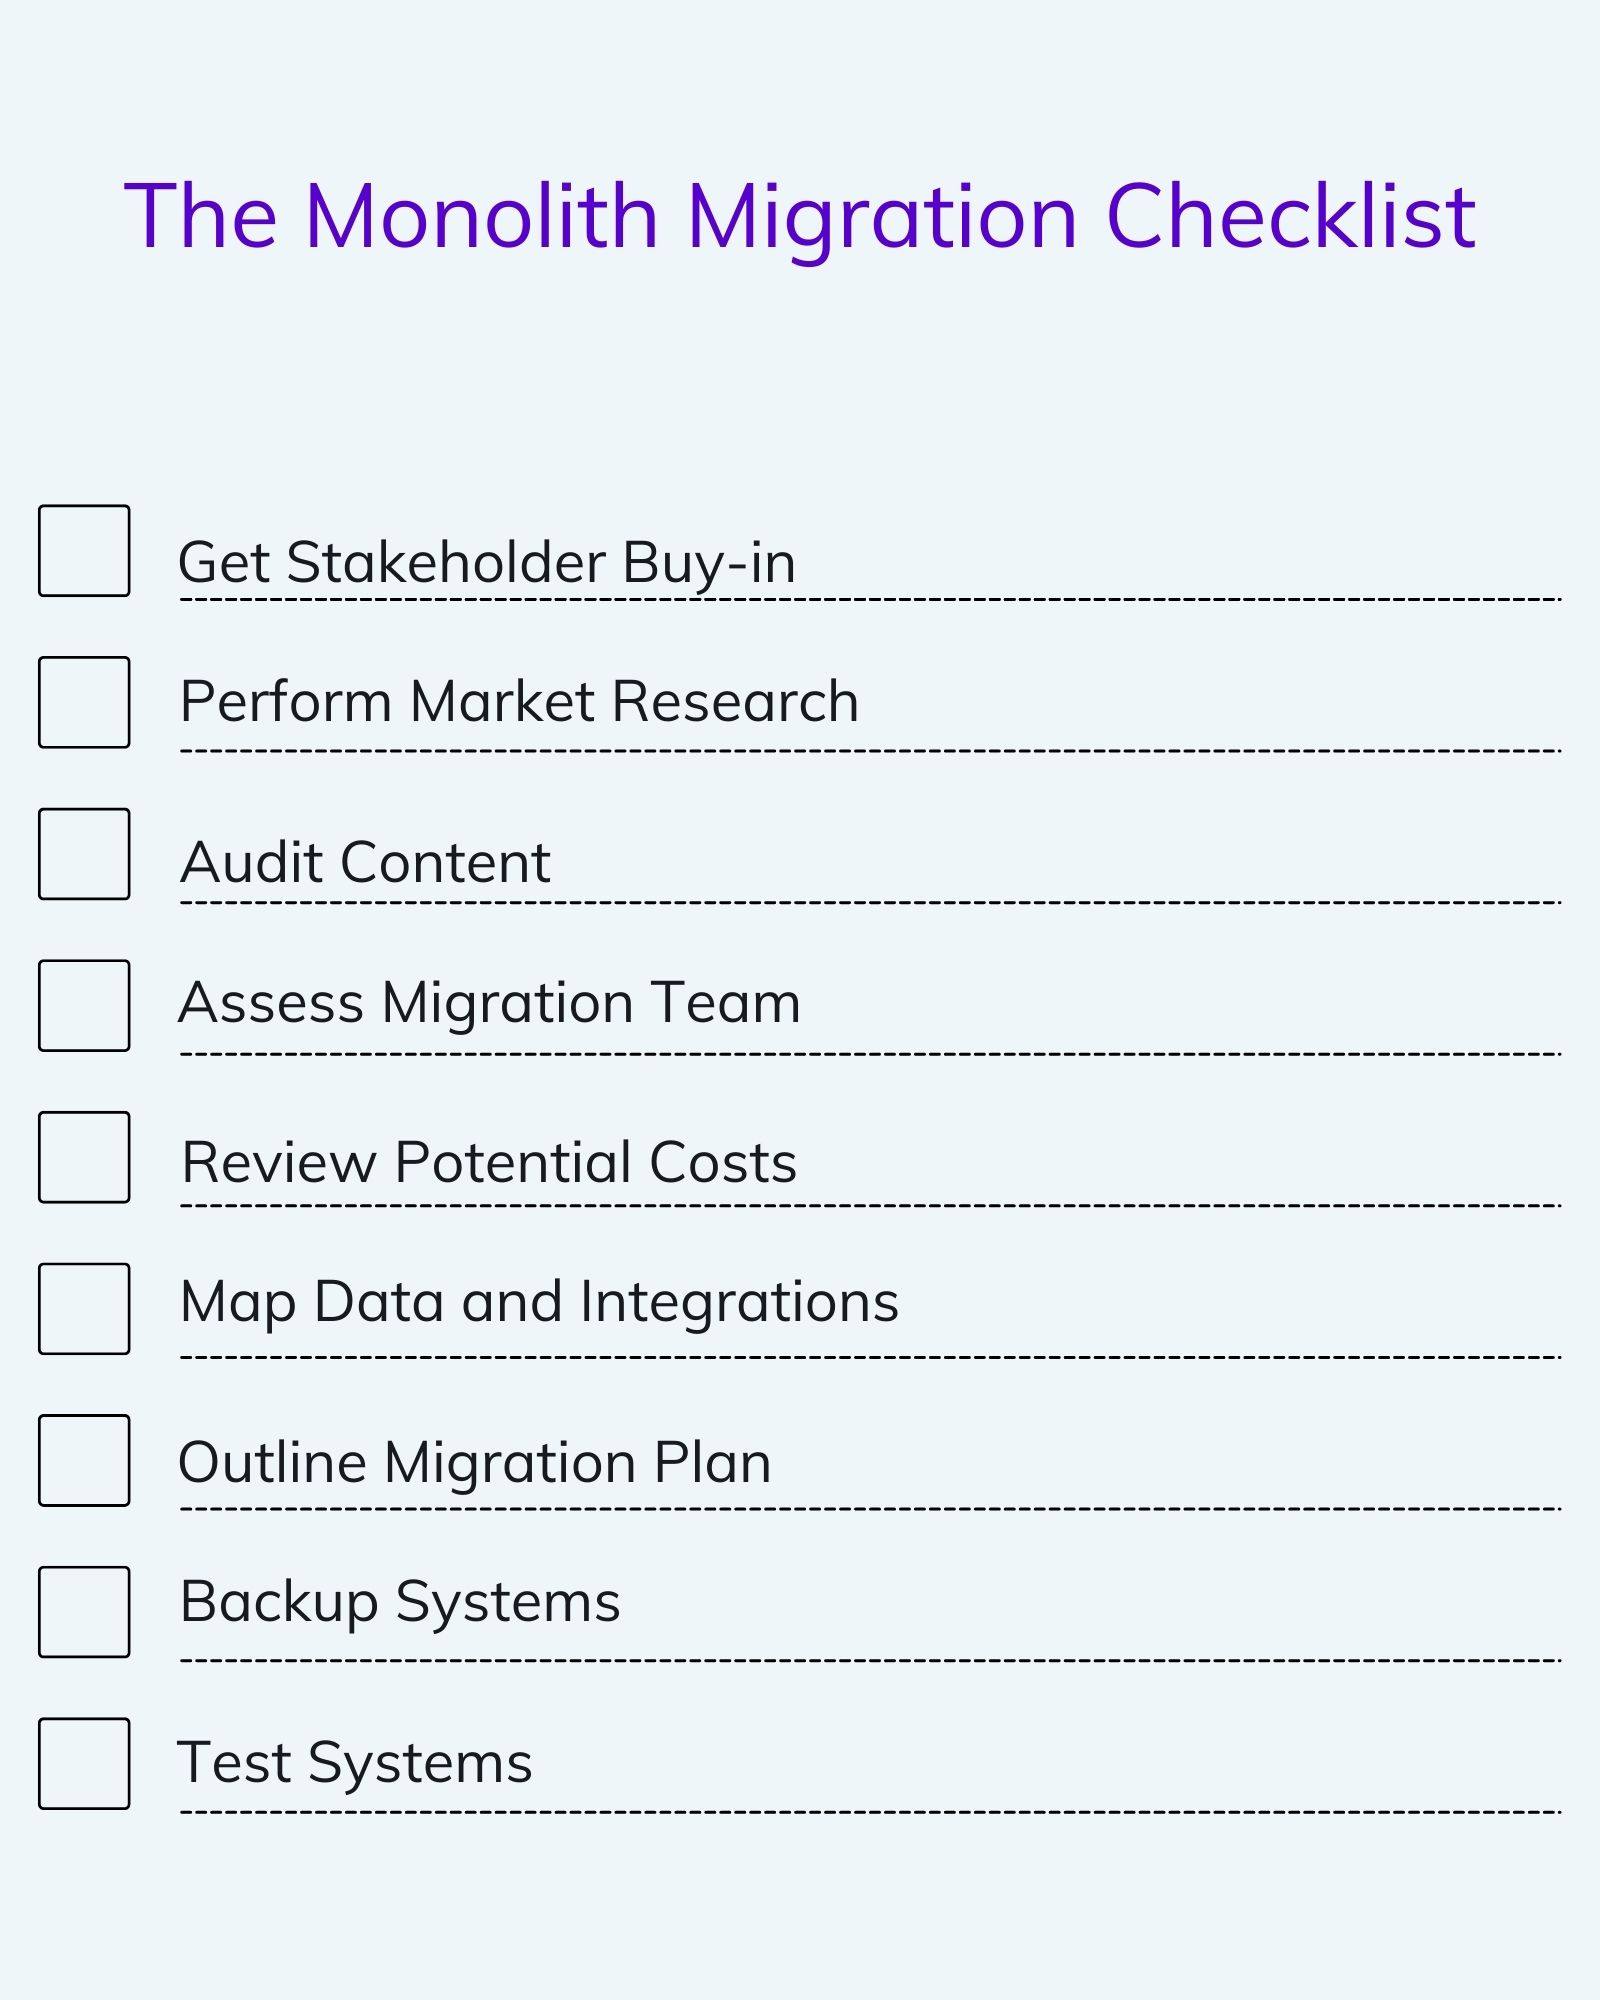 The monolith migration checklist on agilitycms.com